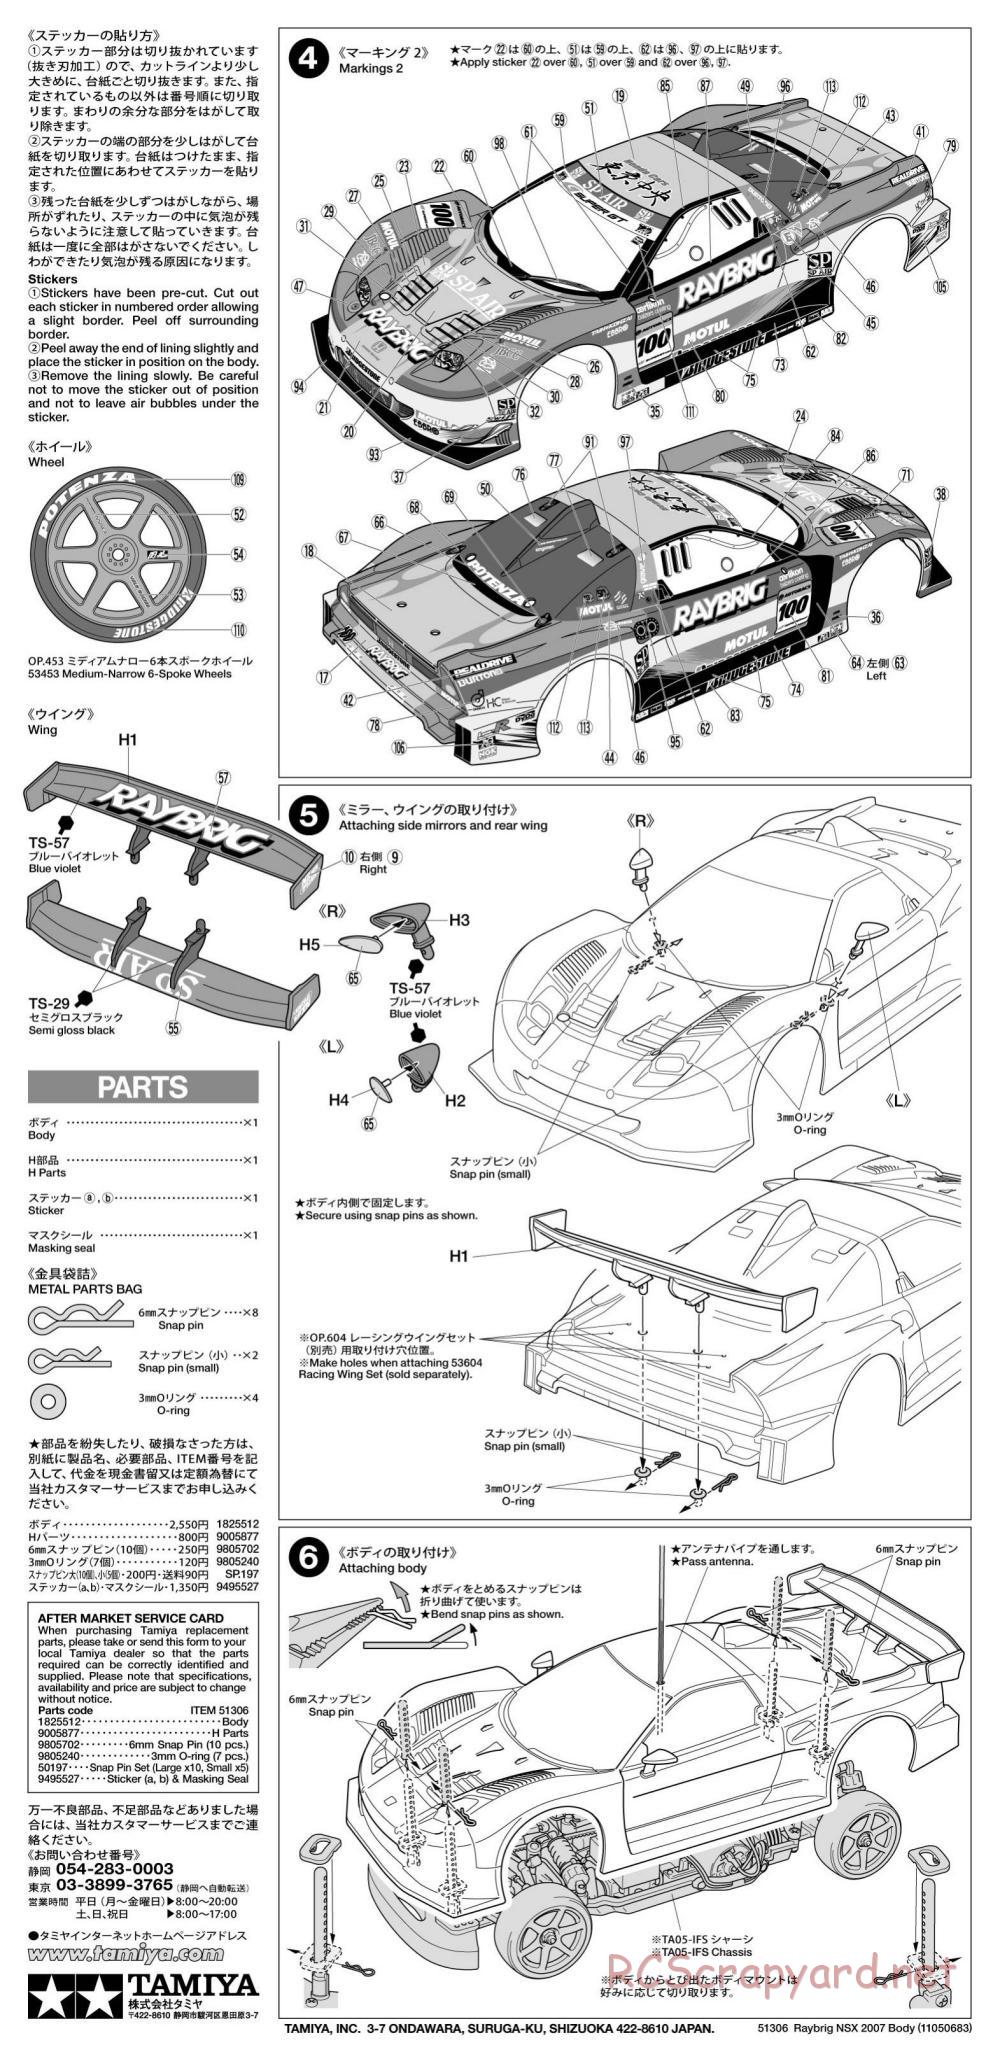 Tamiya - Raybrig NSX 2007 - TA05-IFS Chassis - Body Manual - Page 2